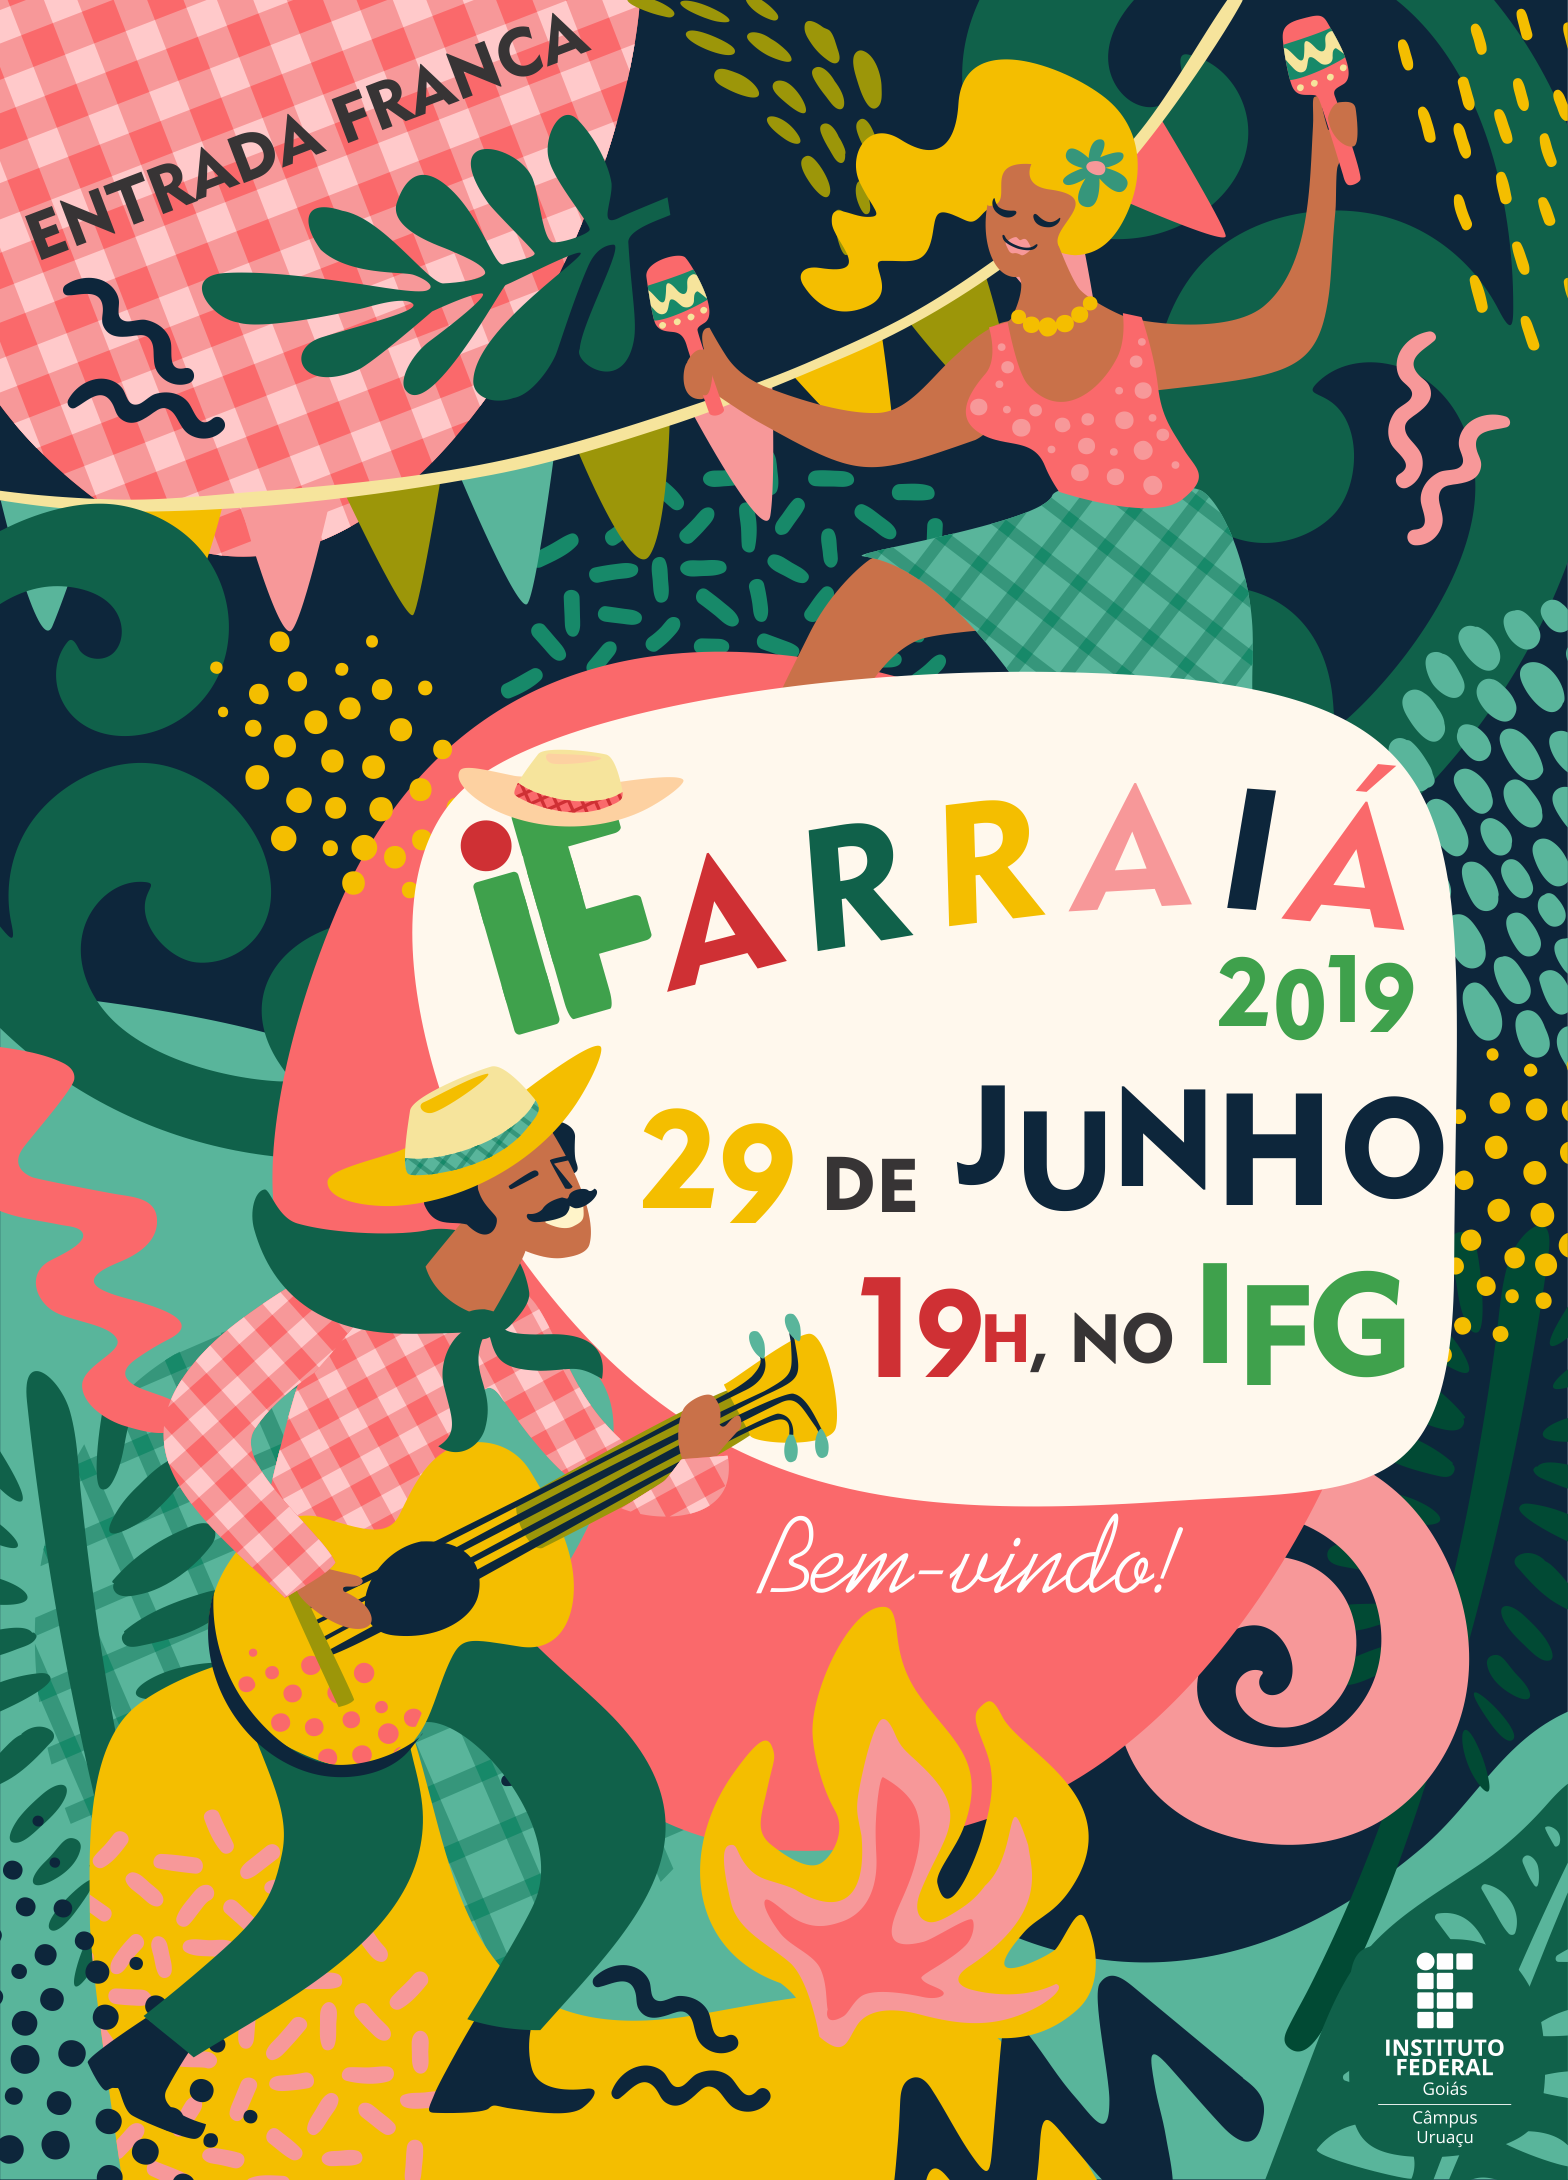 ifarraia 2019 poster